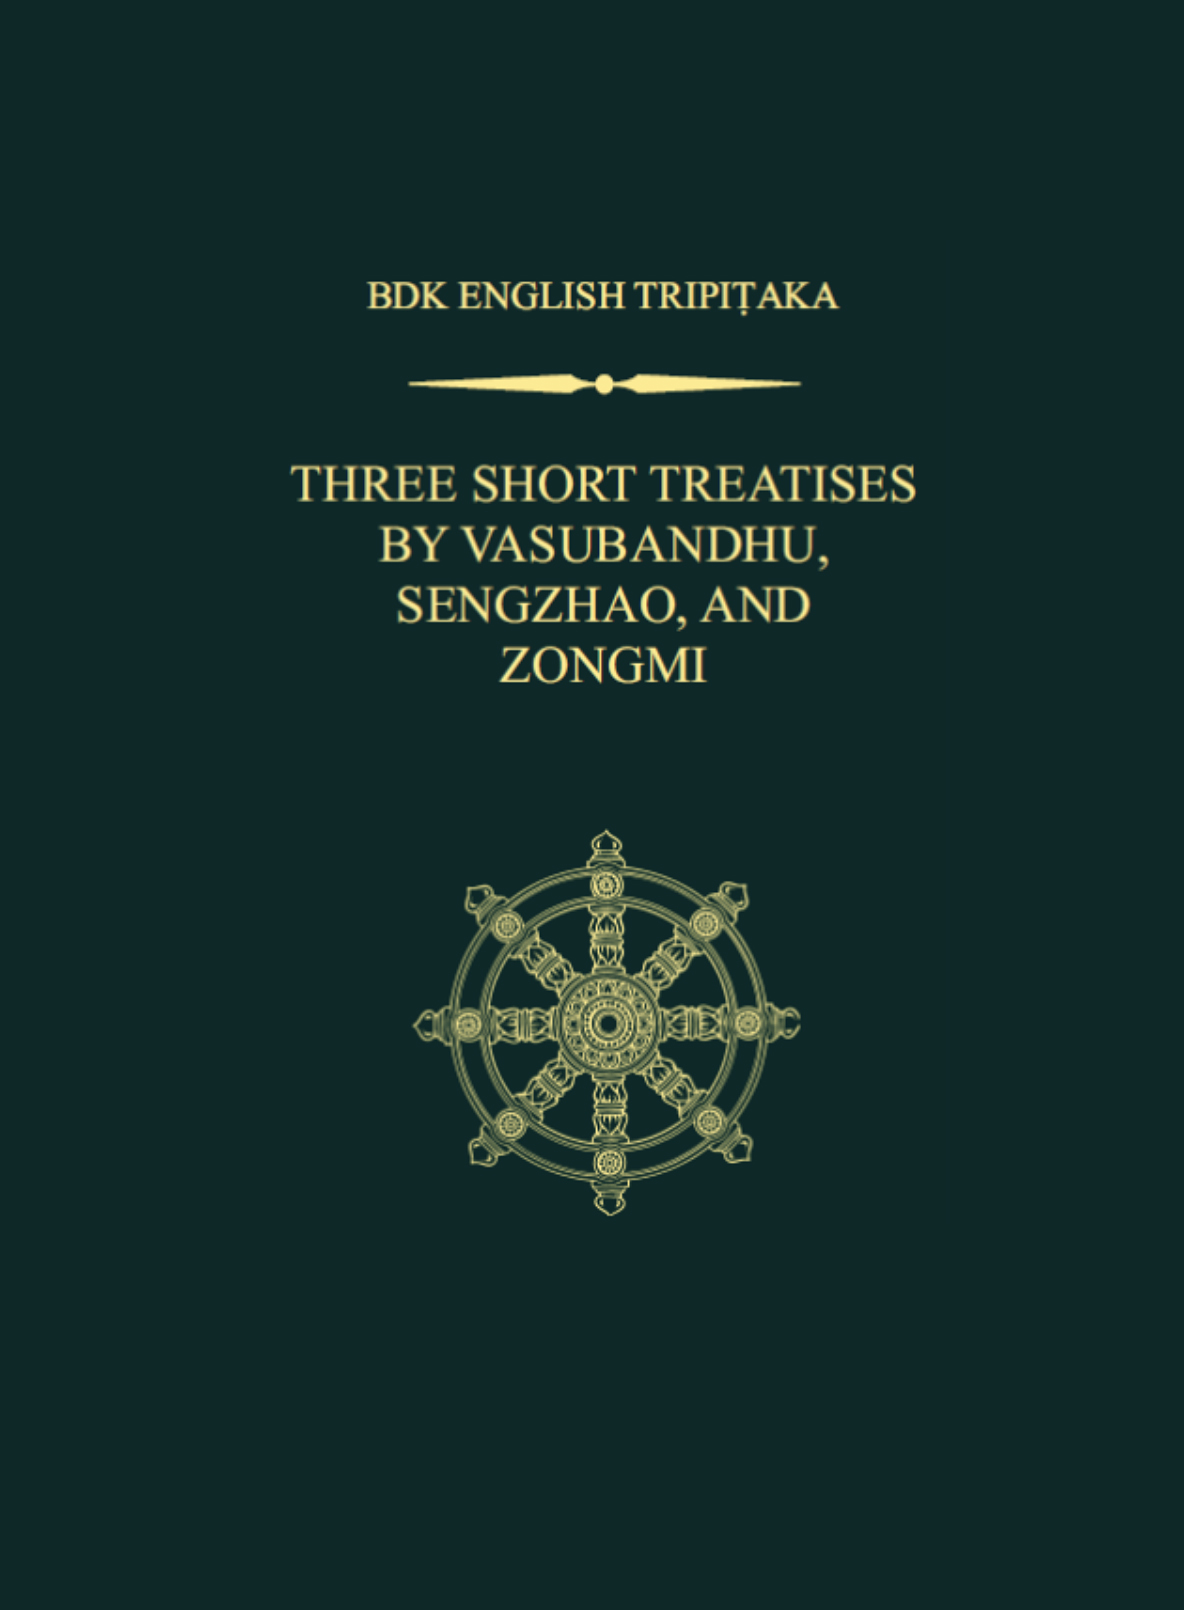 Three Short Treatises-front.jpg